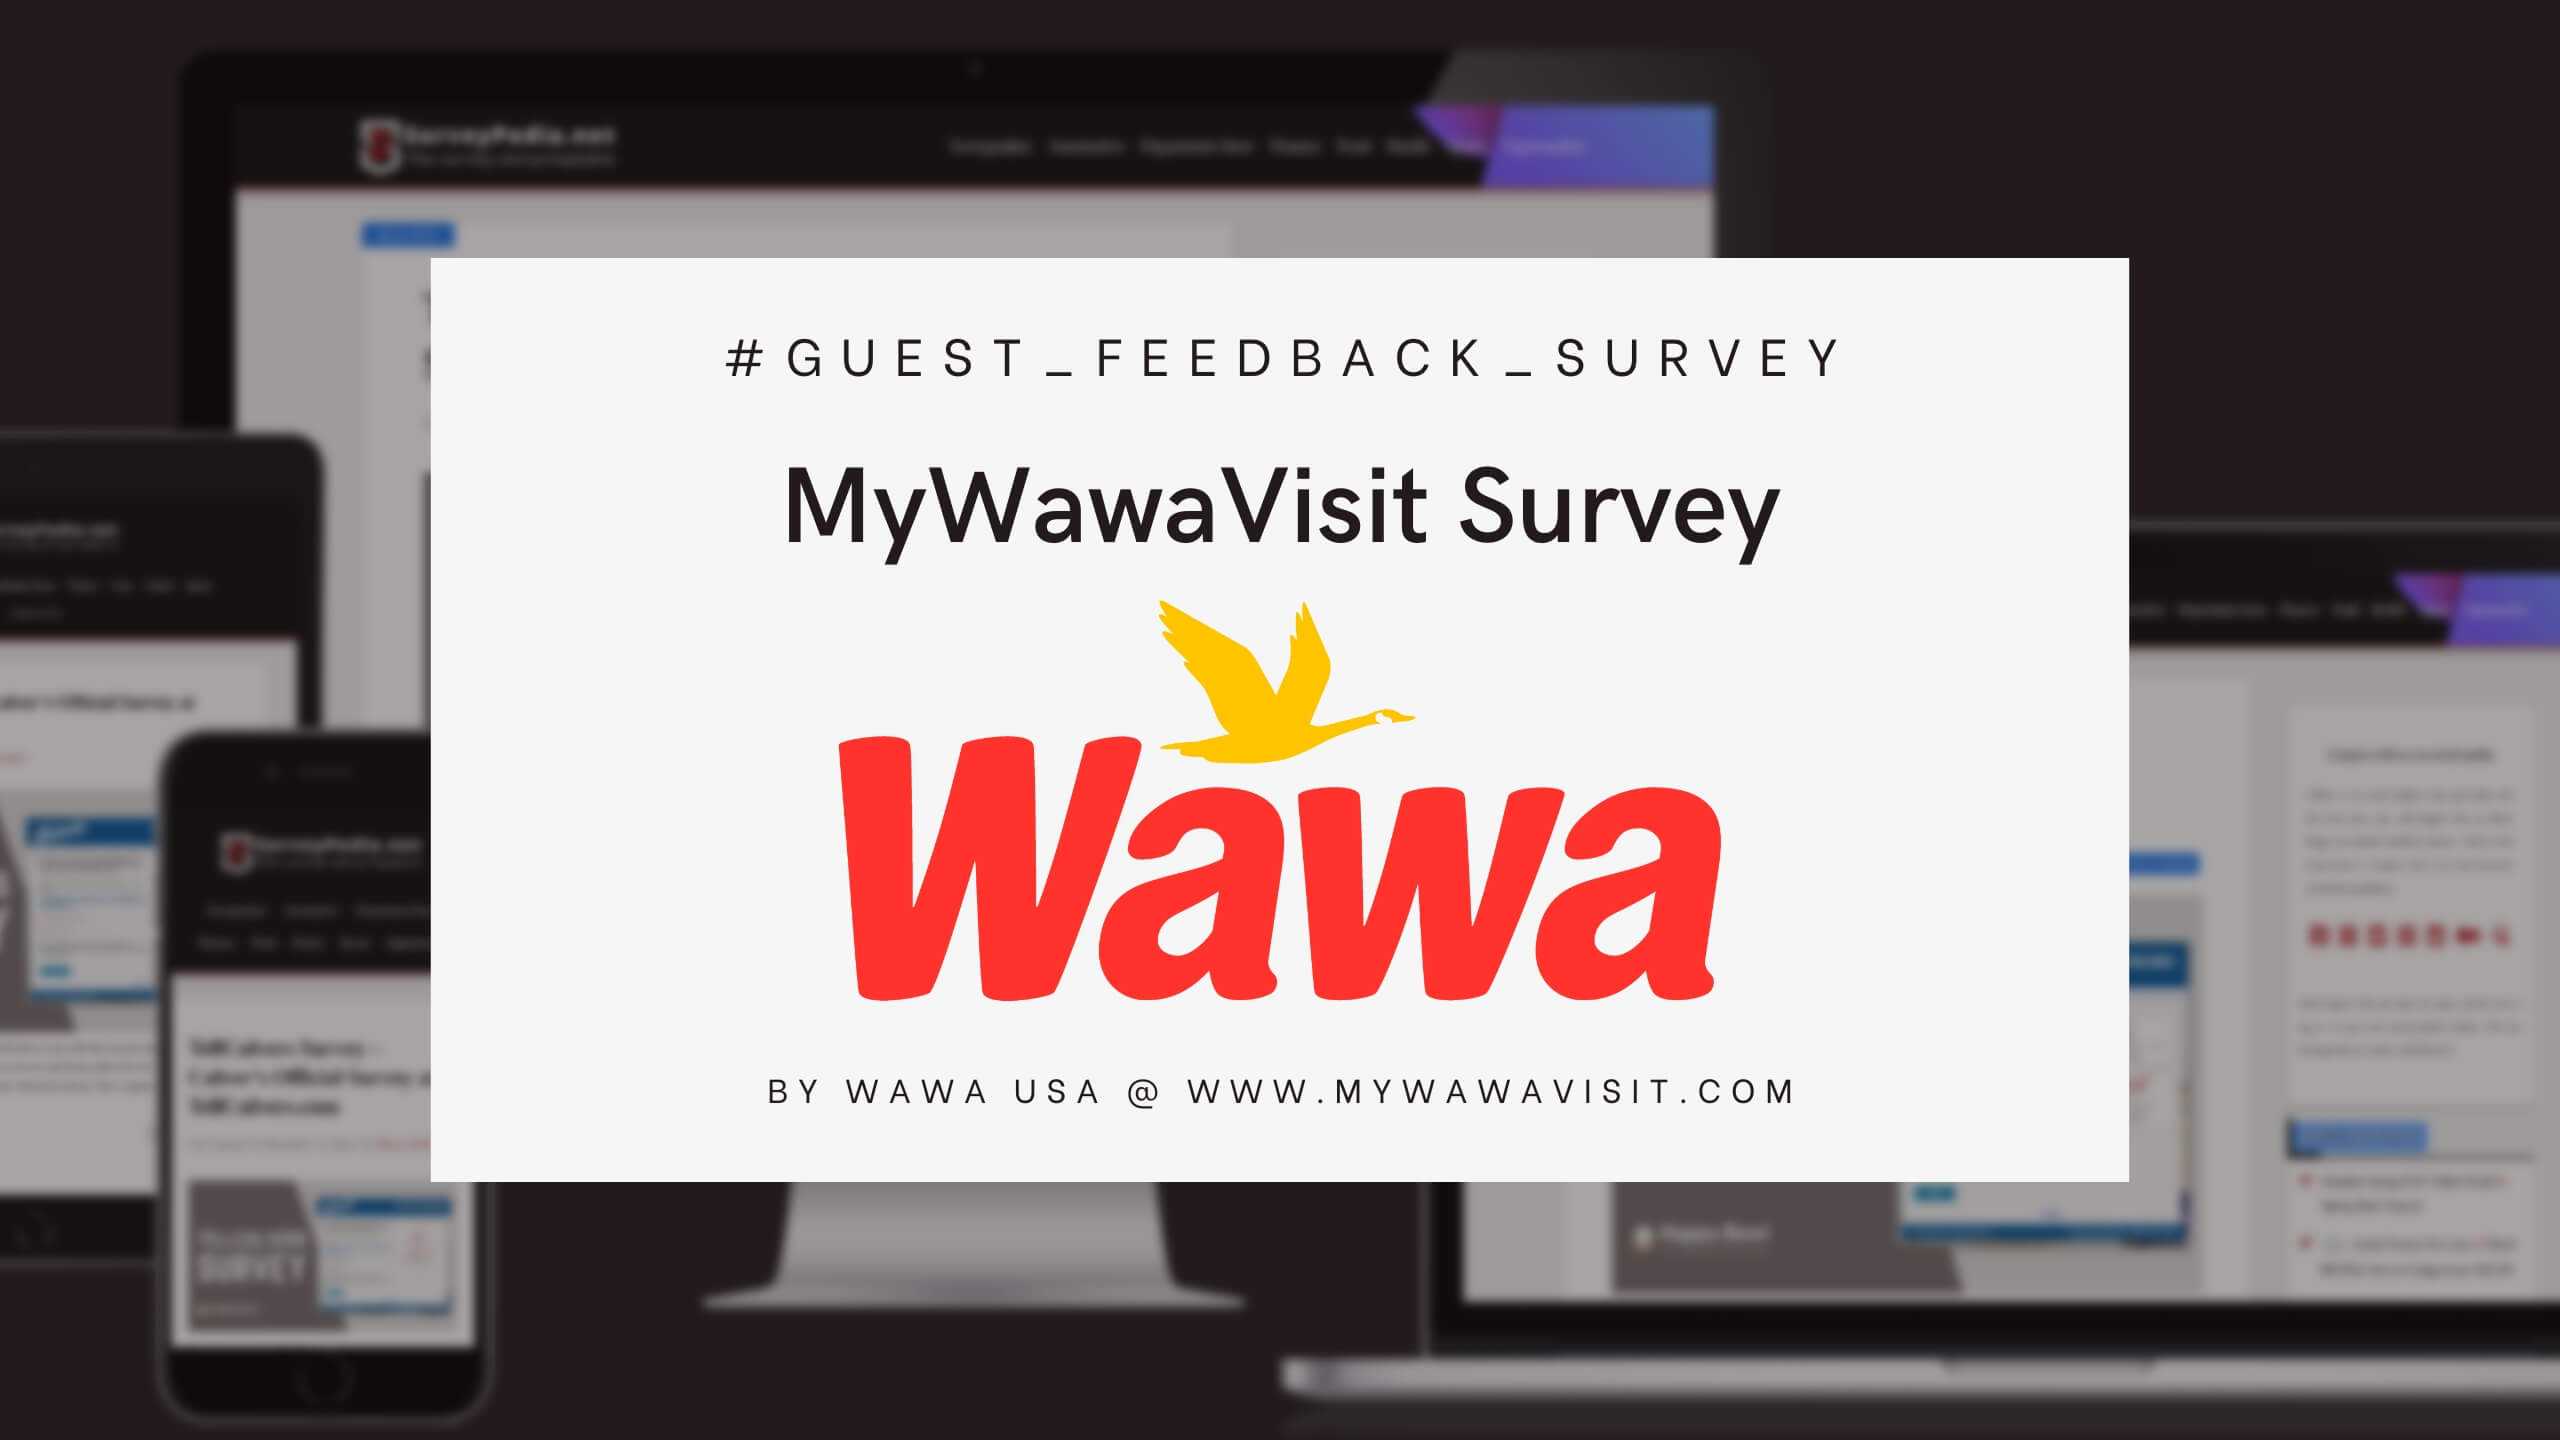 MyWawaVisit Survey Survey: Wawa Official Customer Feedback Survey at www.mywawavisit.com